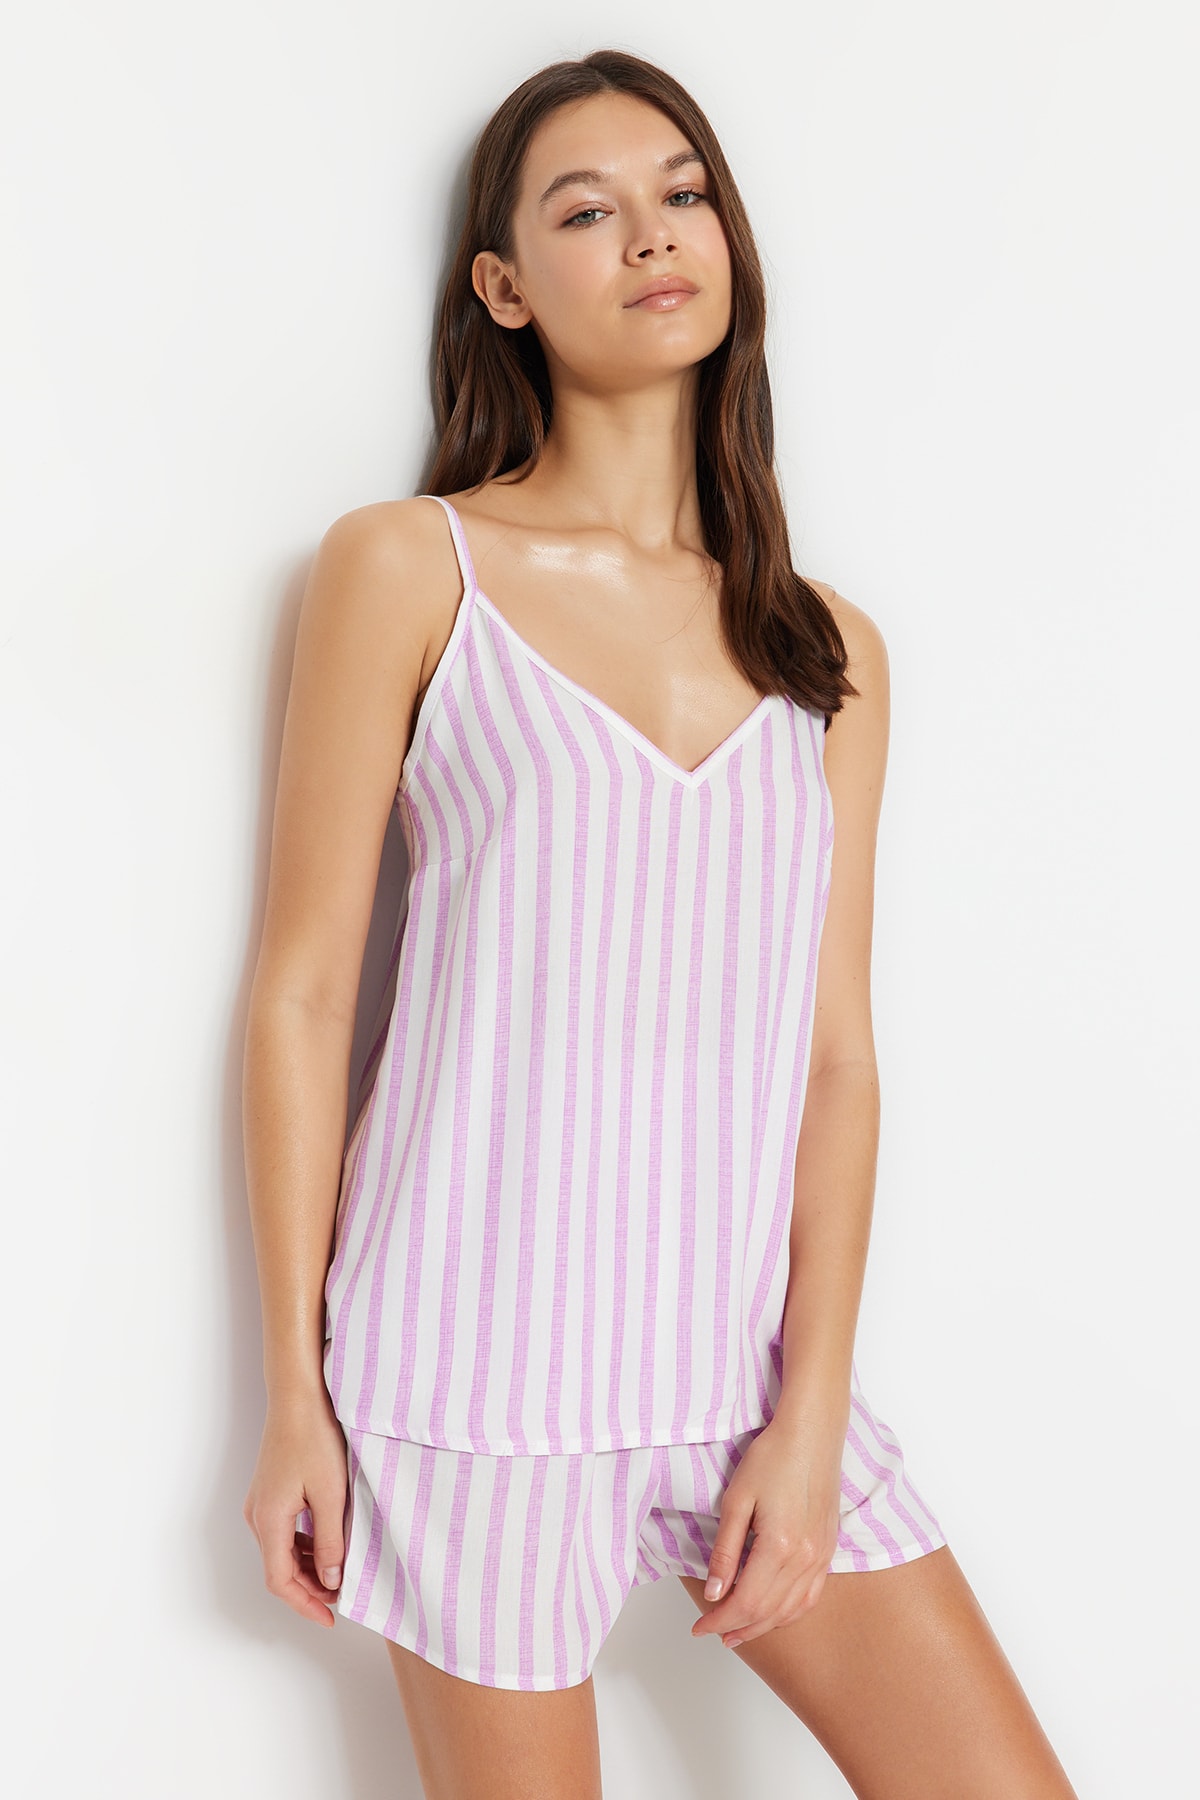 Trendyol Lilac Striped Tank Top-Shorts Woven Pajama Set